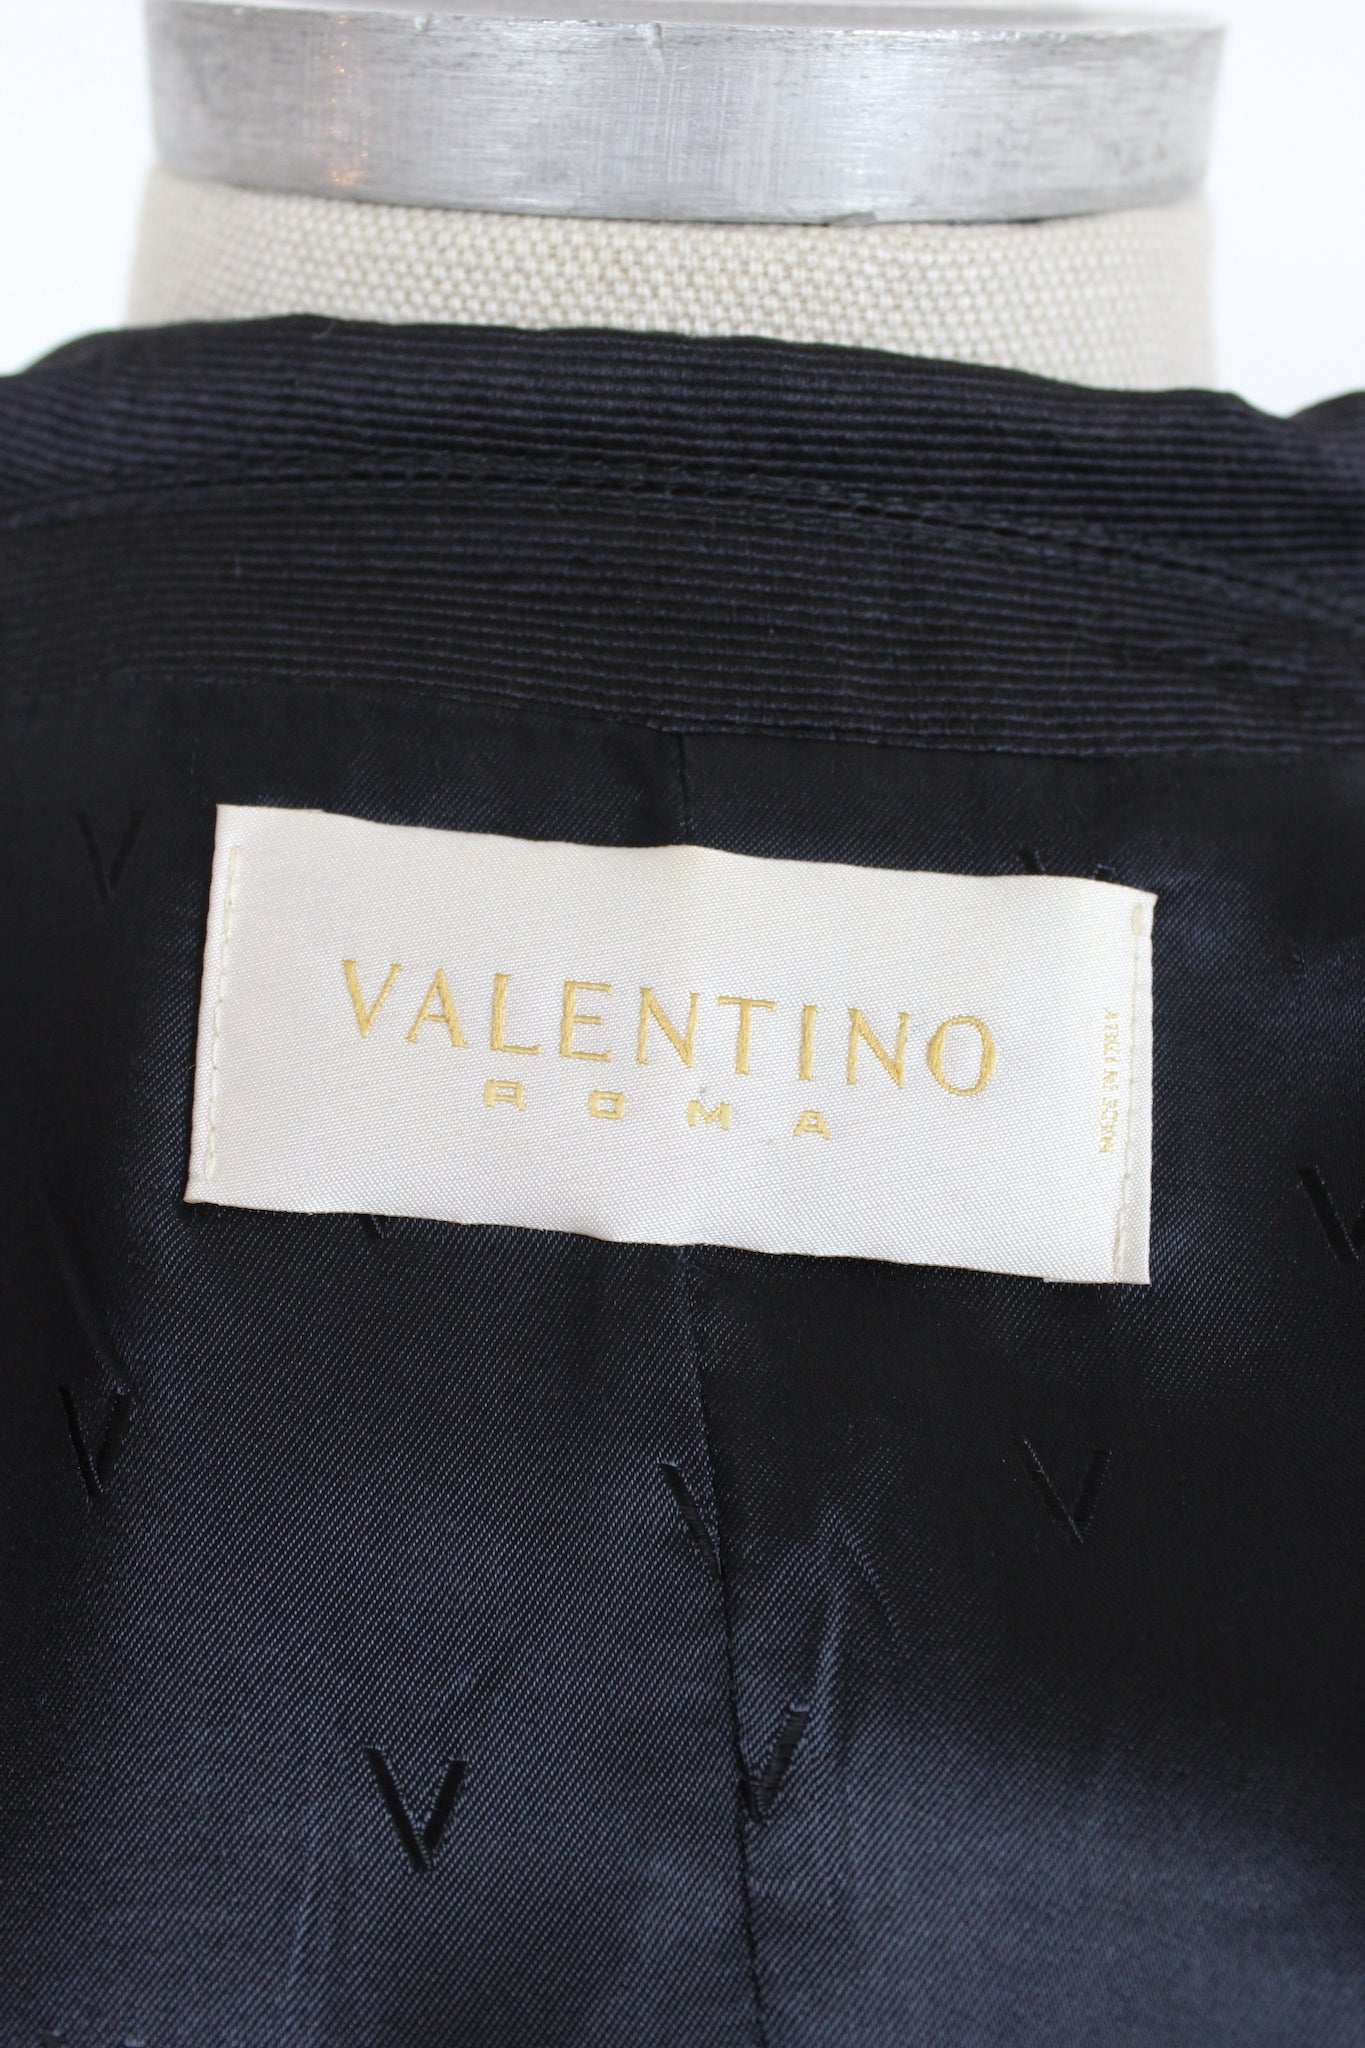 Valentino Giacca Vintage Slim Fit Nera Lucida Anni '90